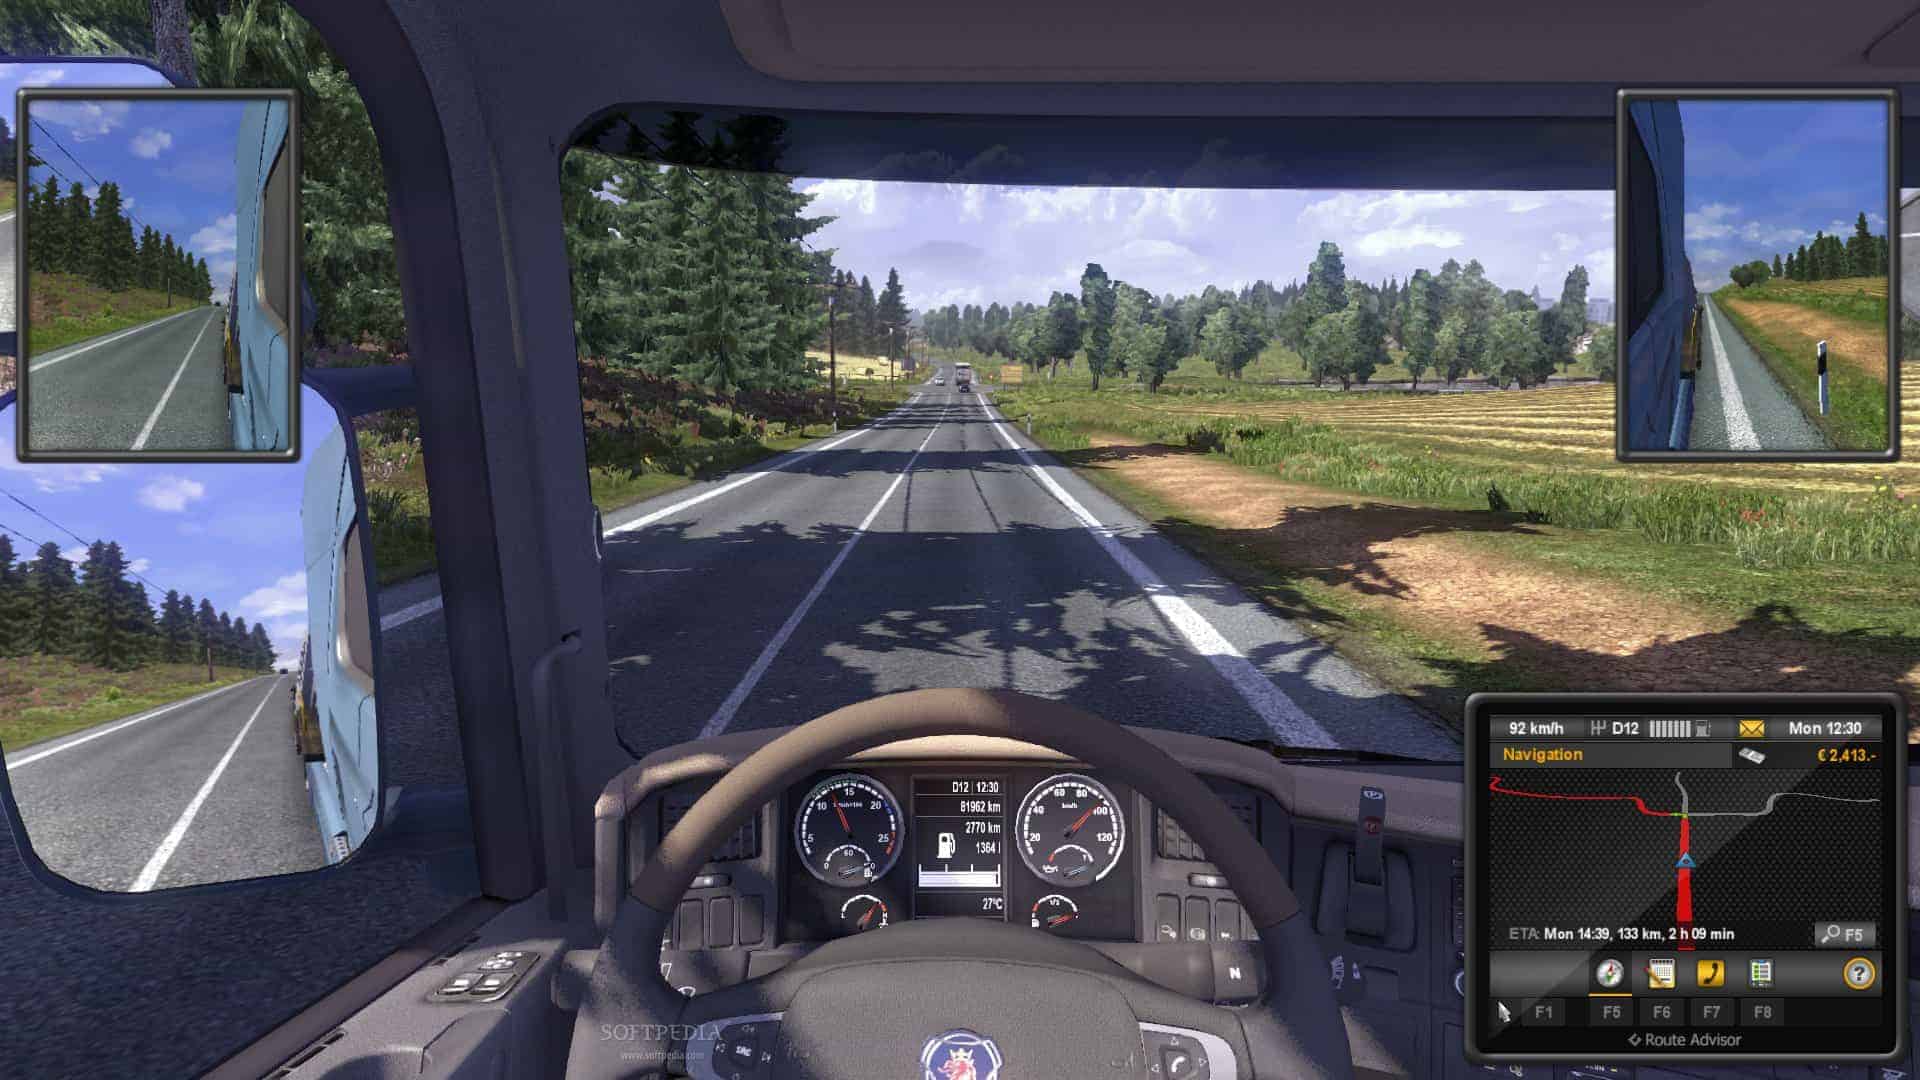 euro truck simulator 3 download free full version for pc